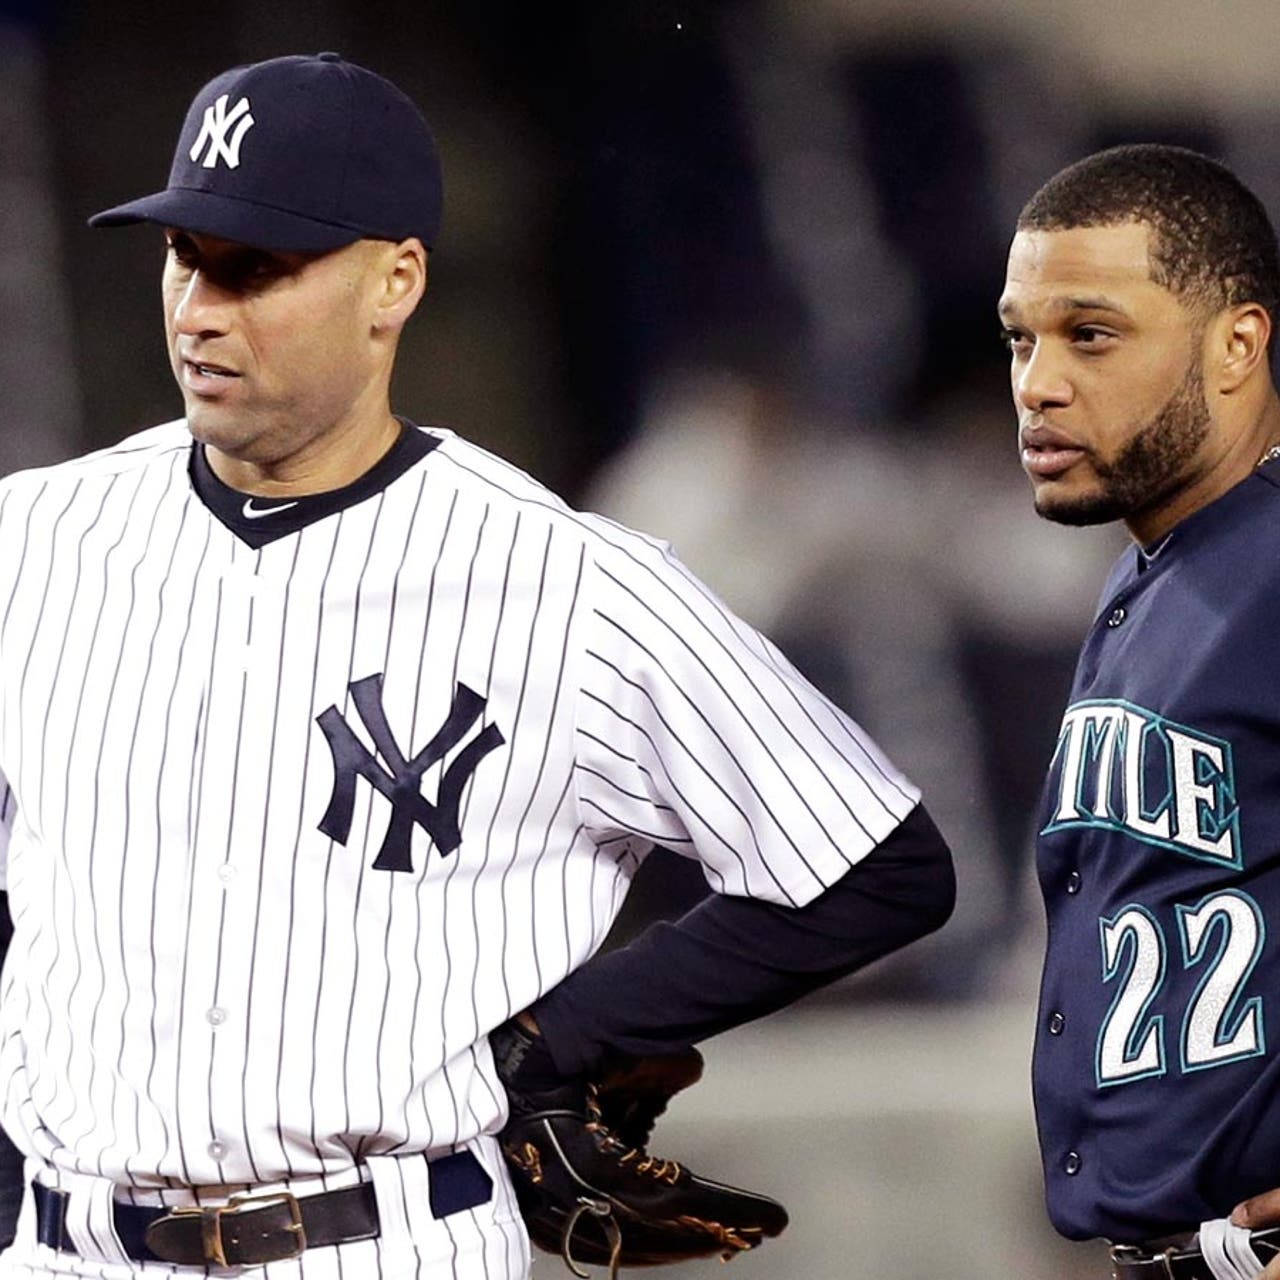 Cano hears boos in the Bronx, helps Mariners beat Yankees